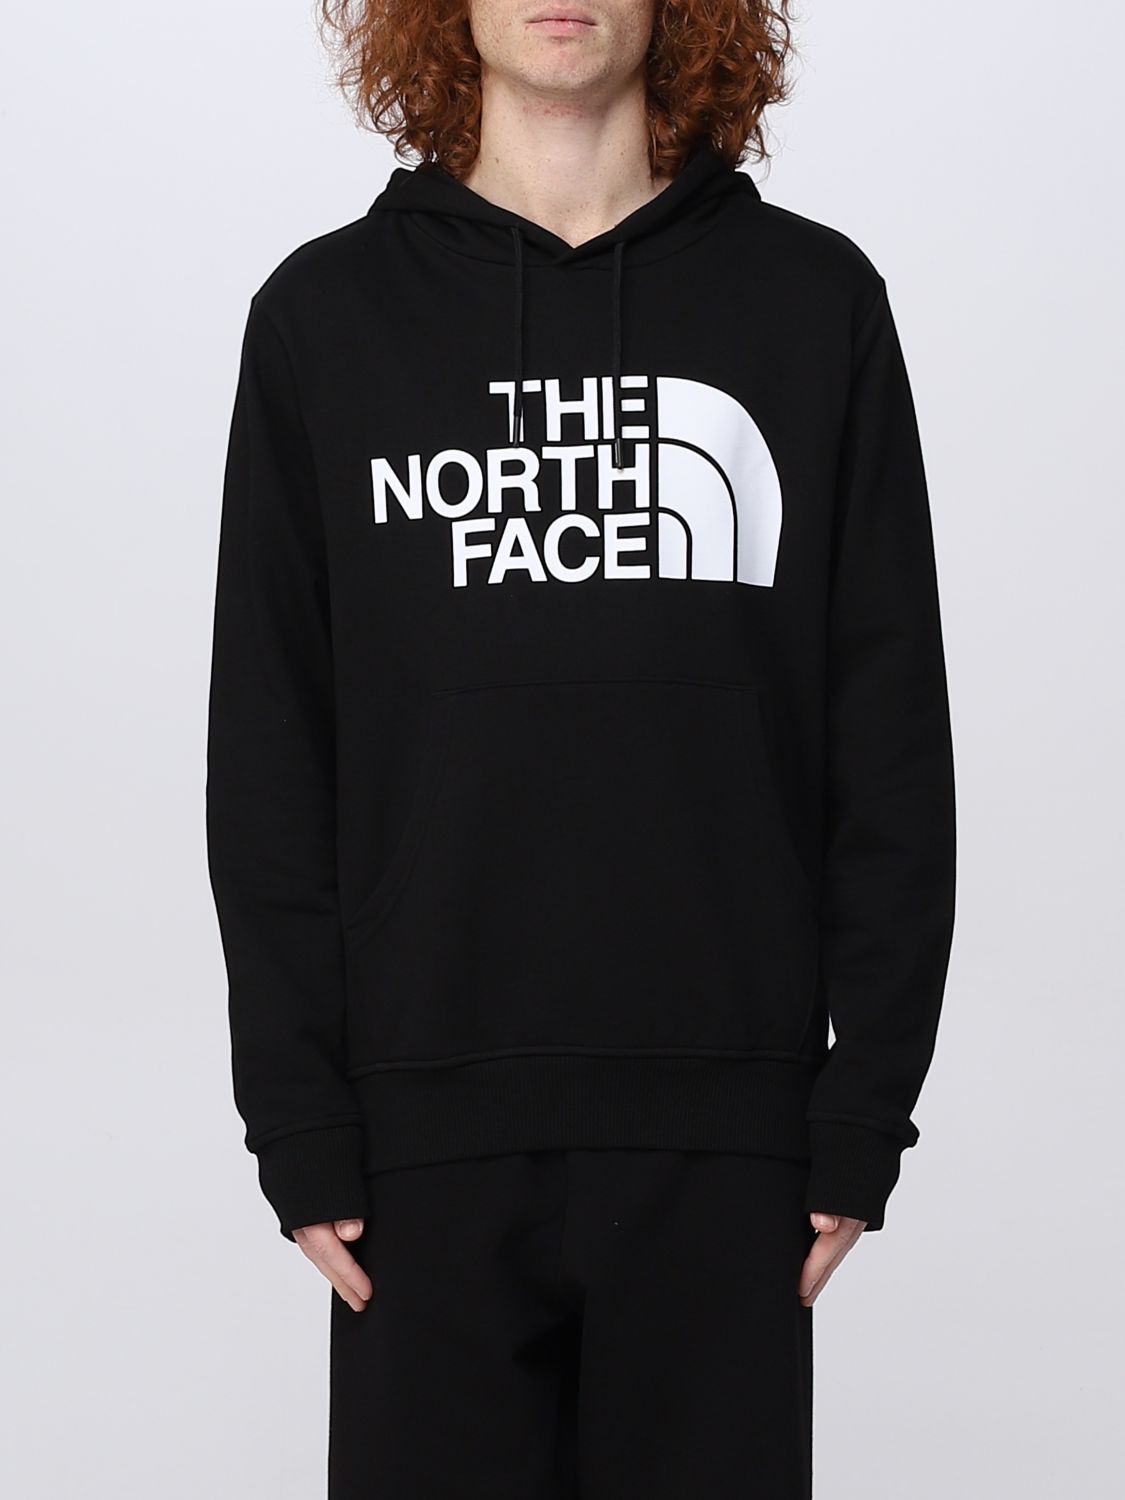 Sweatshirt The North Face: The North Face Herren Sweatshirt schwarz 1